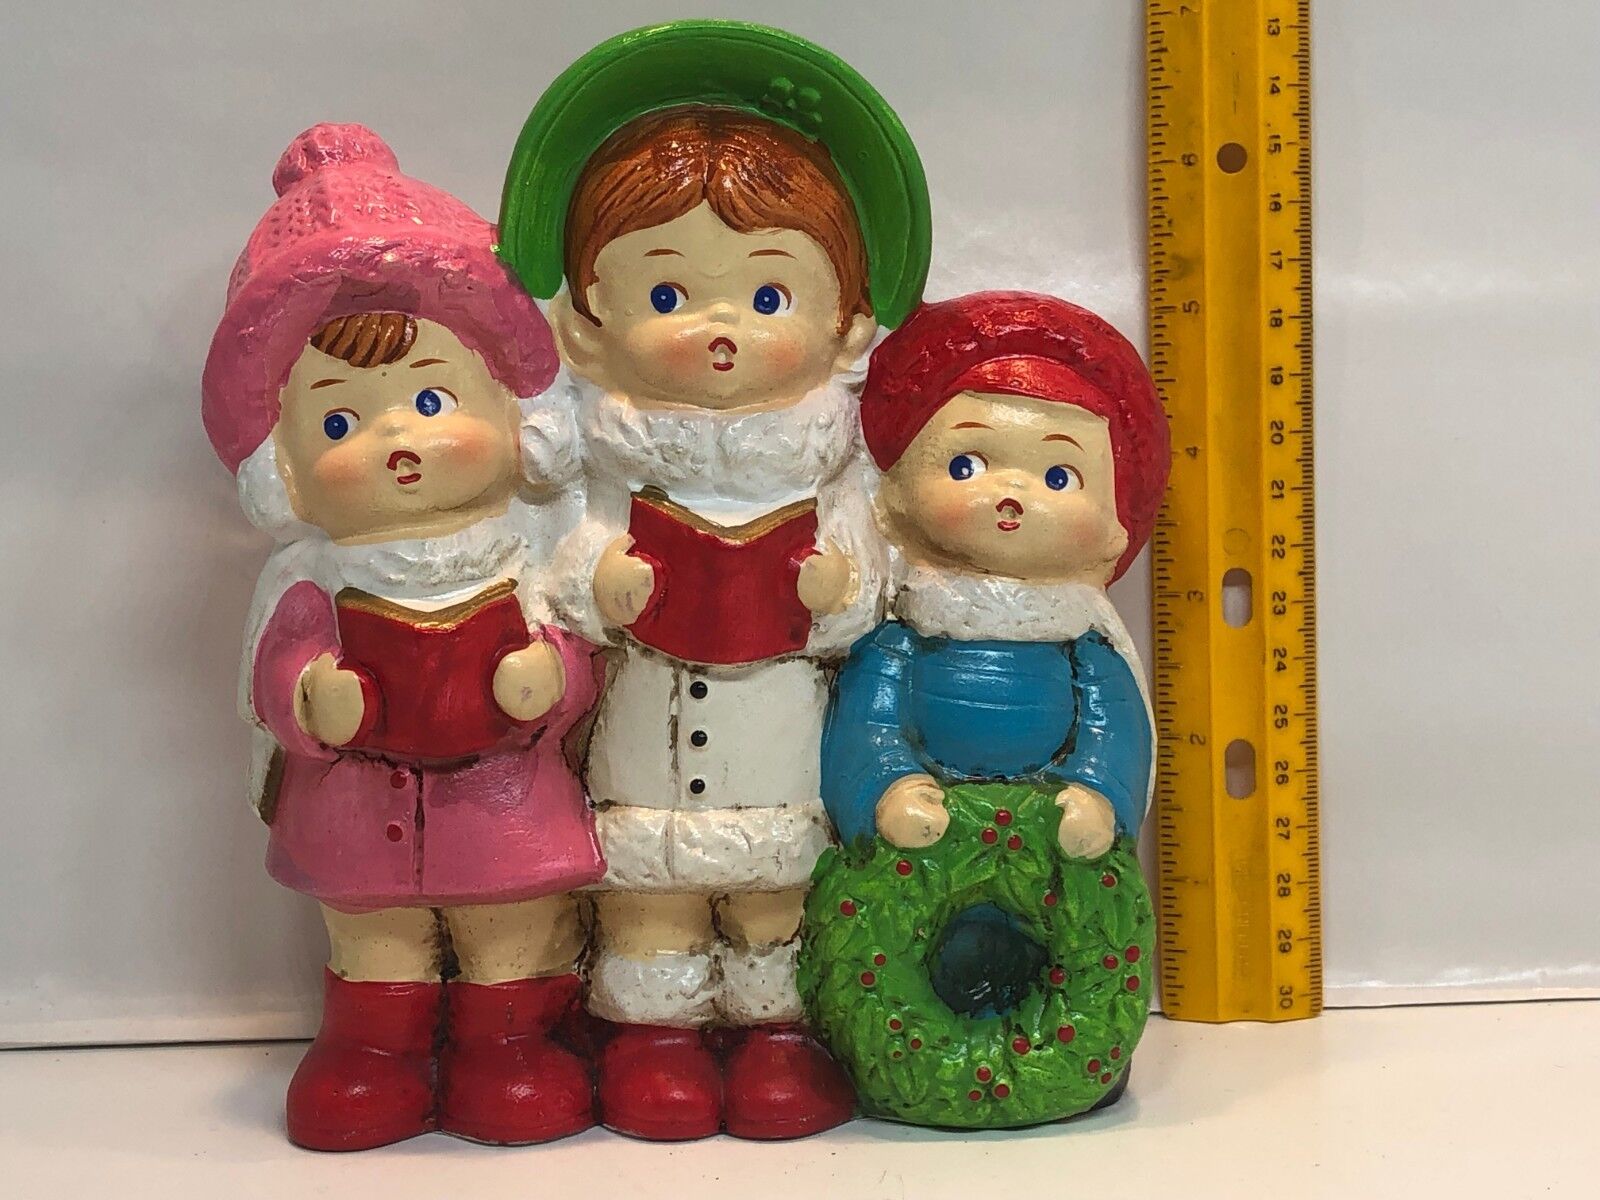 Vintage Music Box Children Carolers Figurine Japan Plaster? Chalkware? KN Japan